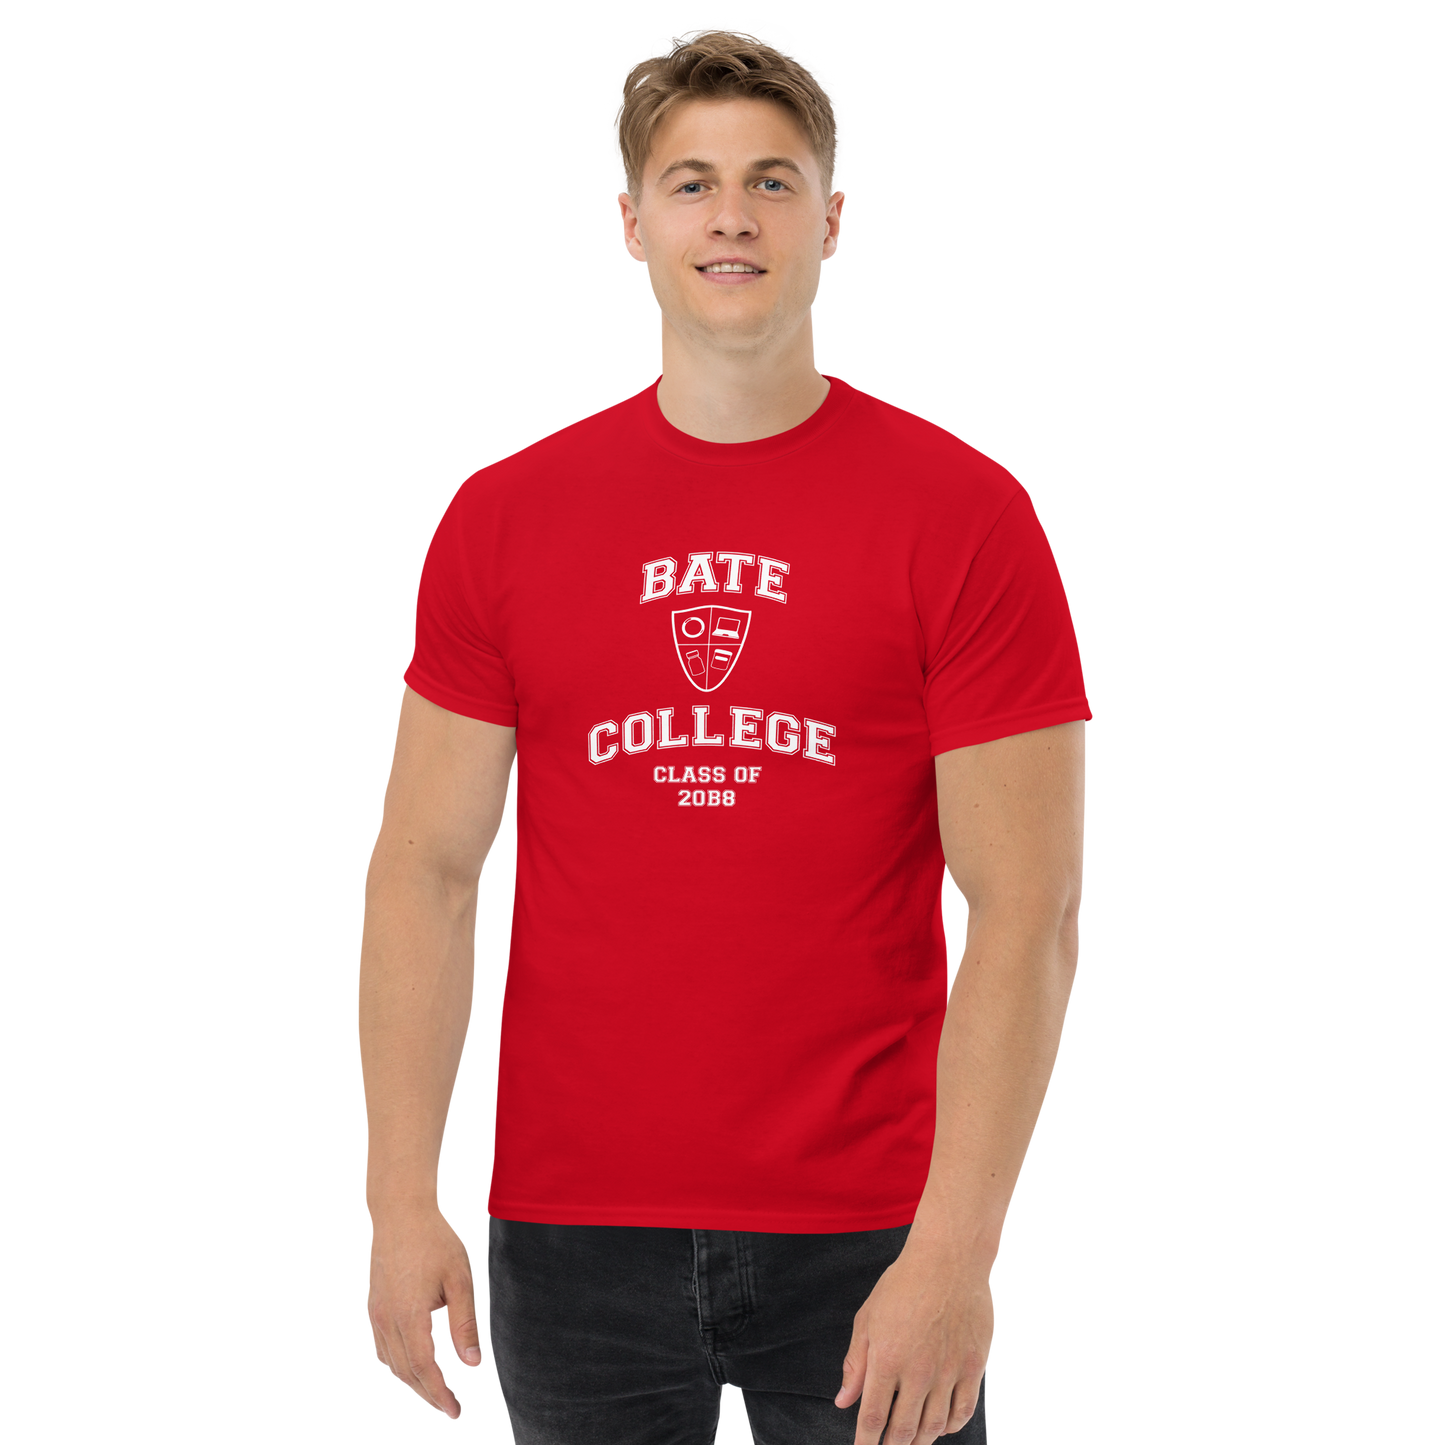 Bate College heavyweight tee